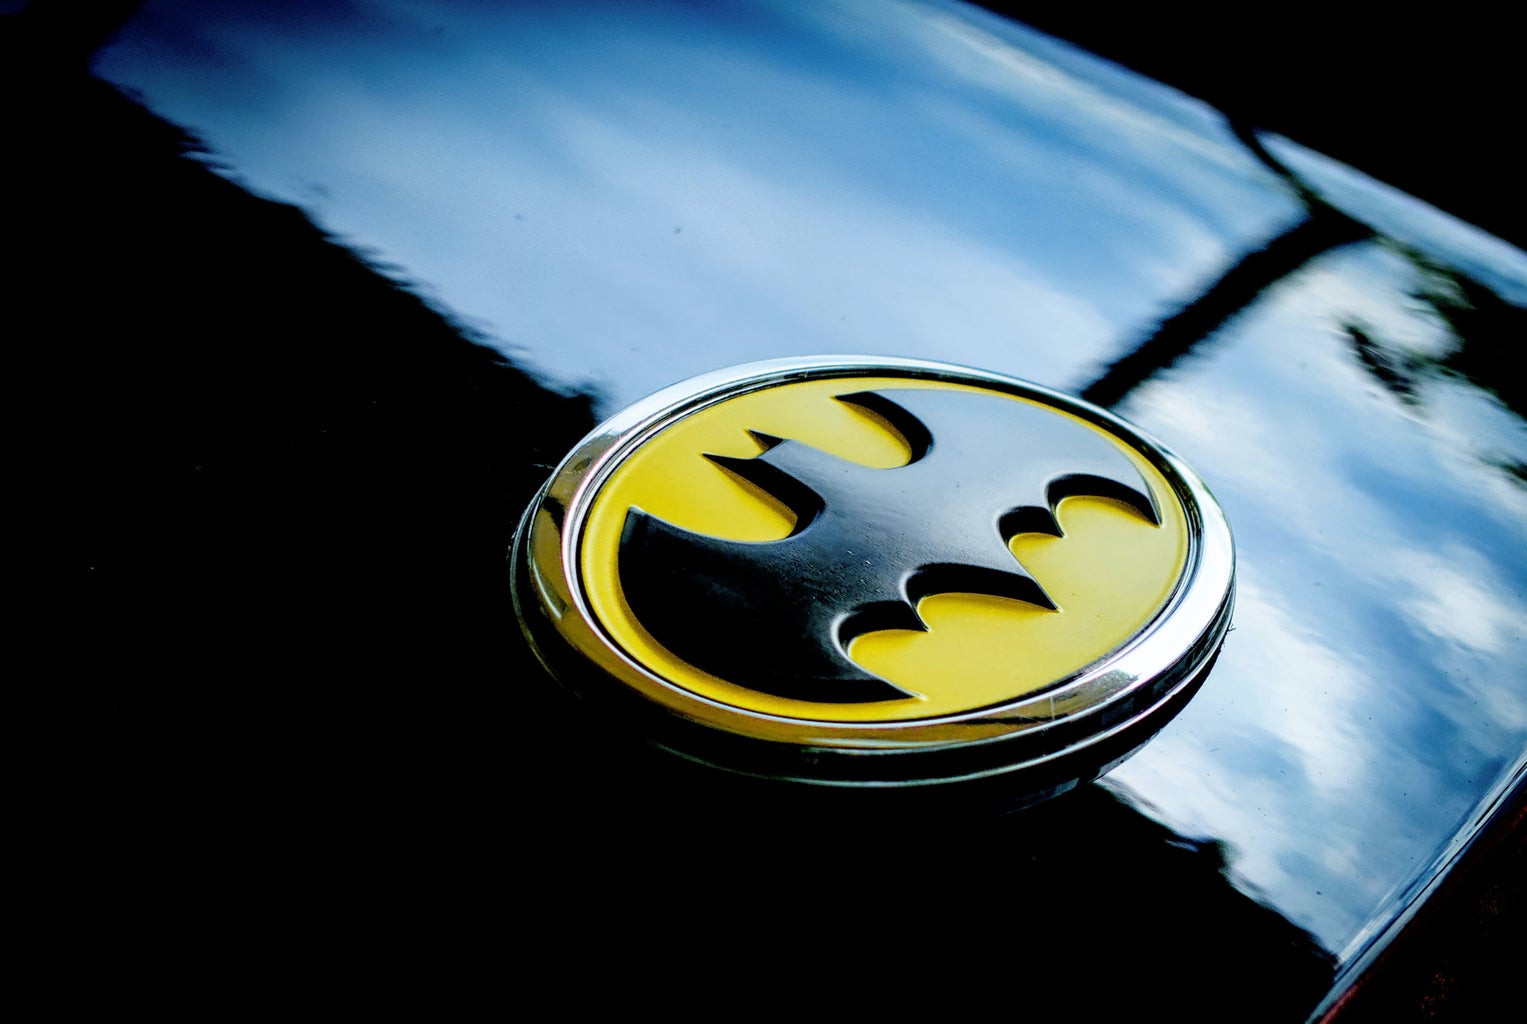 The batman logo, like his symbol as a superhero